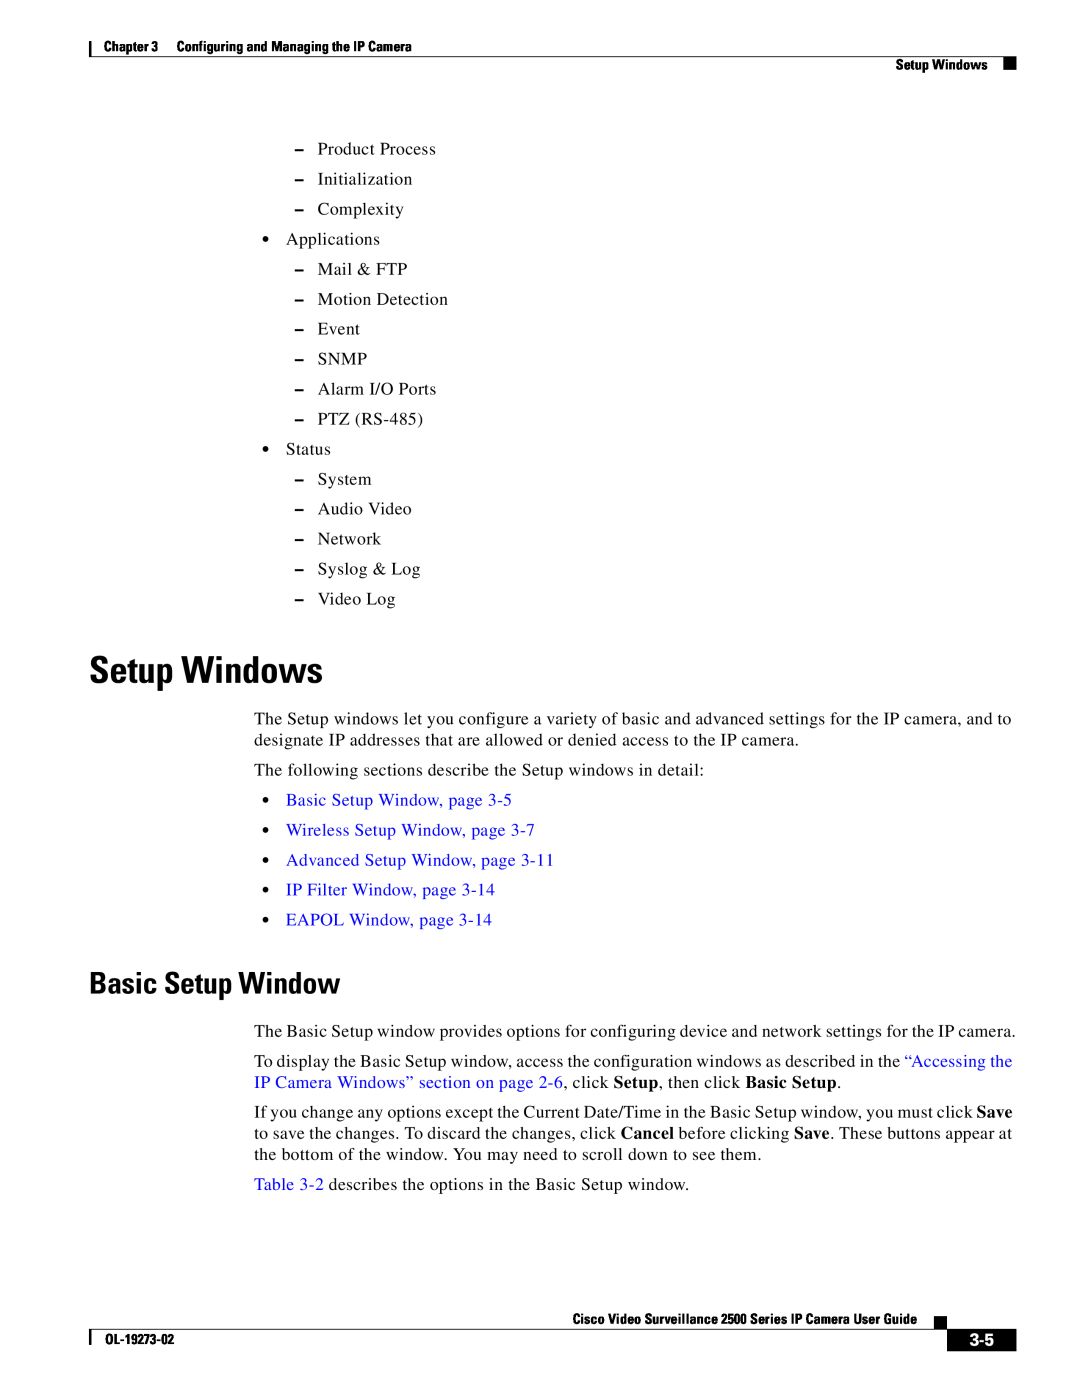 Cisco Systems CIVS-IPC-2500, 2500 Series manual Setup Windows, Basic Setup Window, page Wireless Setup Window, page 